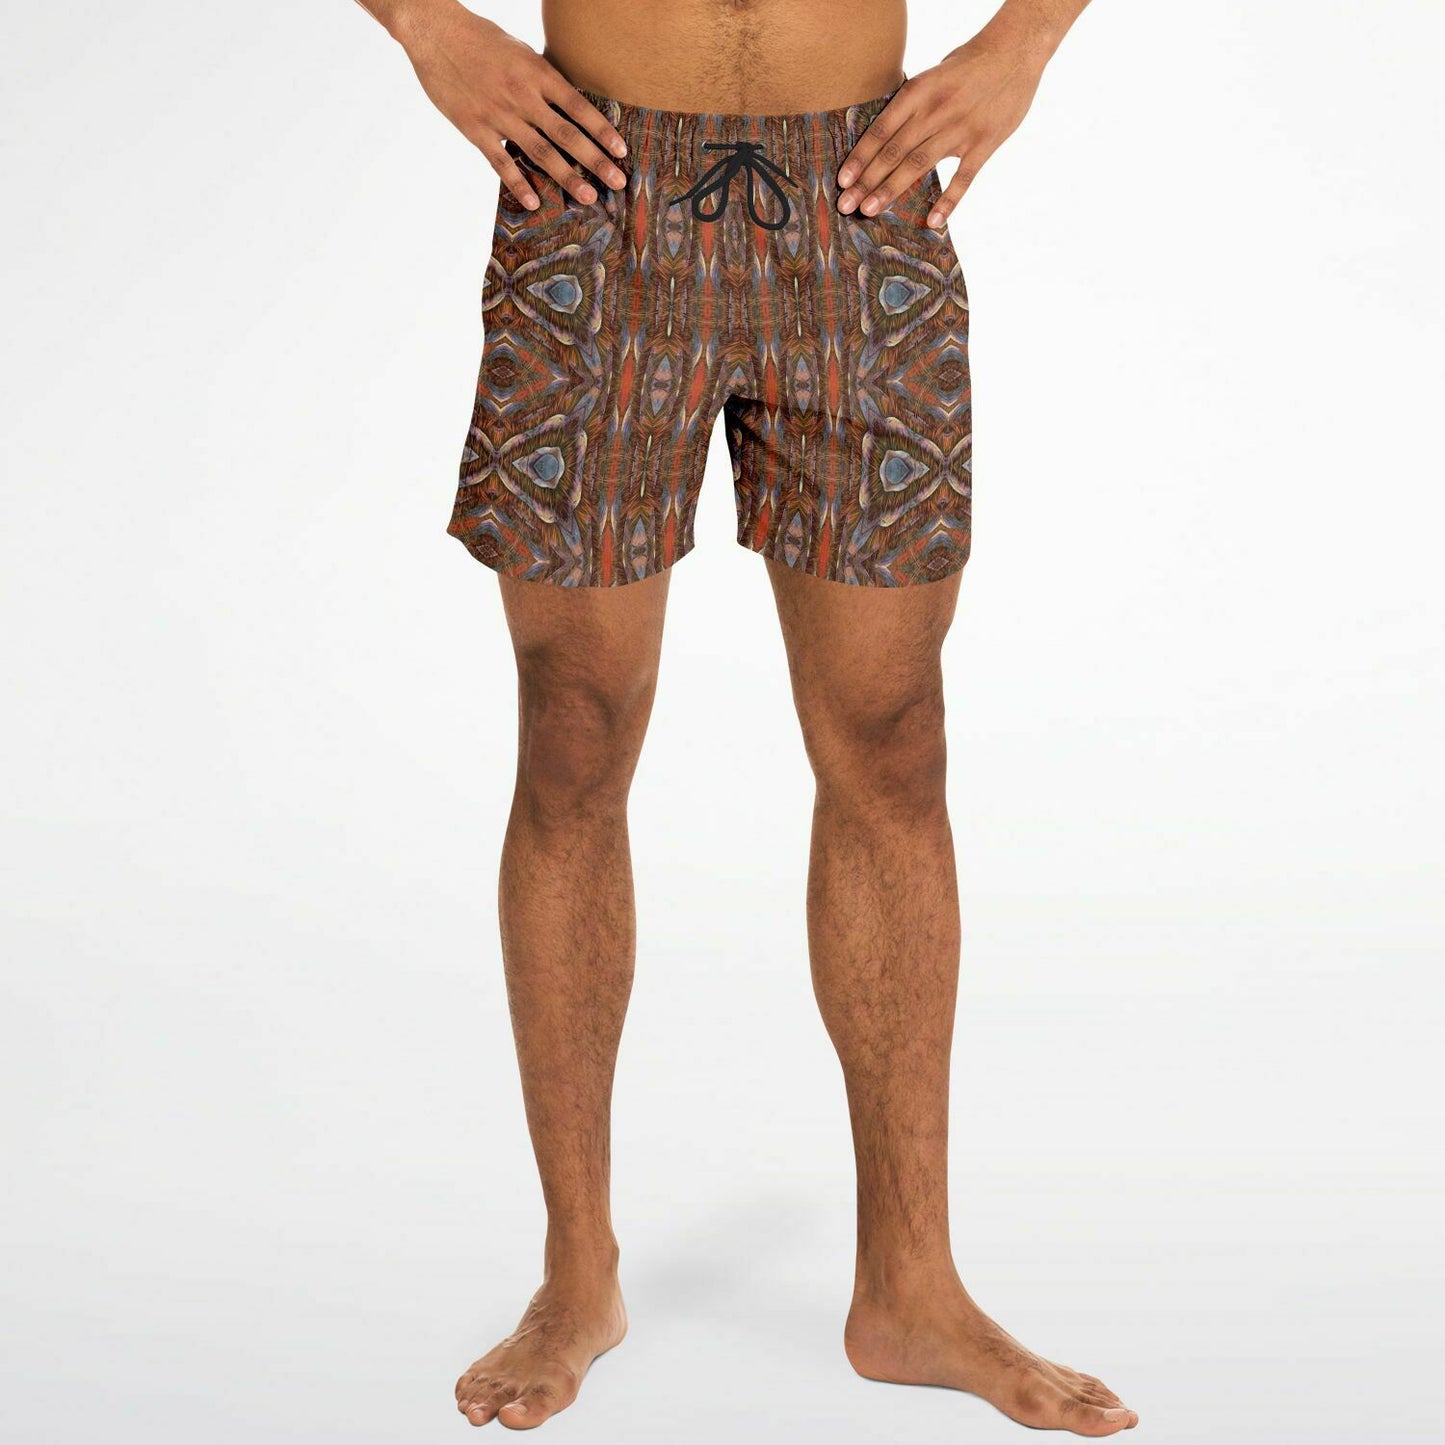 mens swim suit with brown,grey and orange designer print